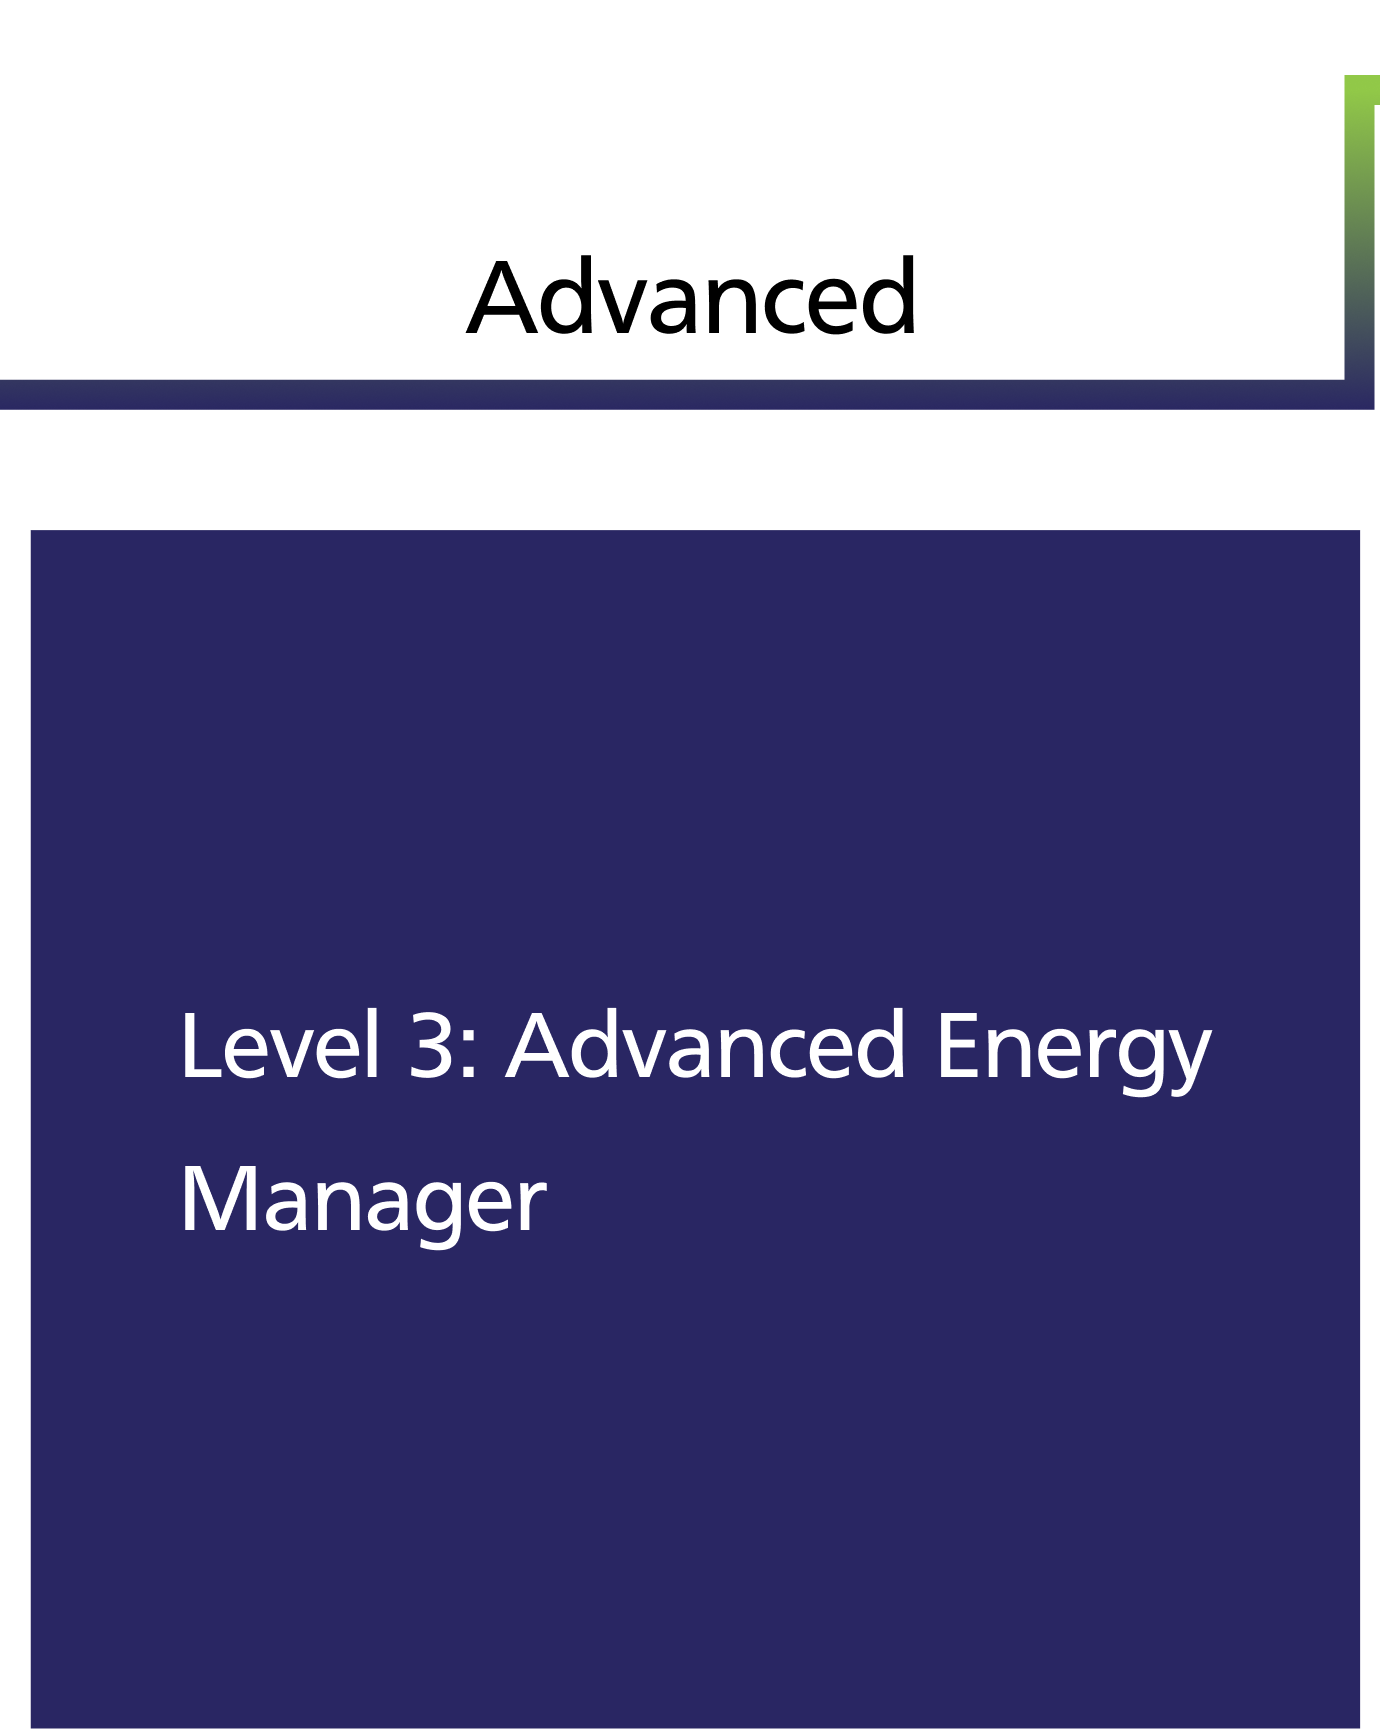 Level 3: Advanced Energy Manager